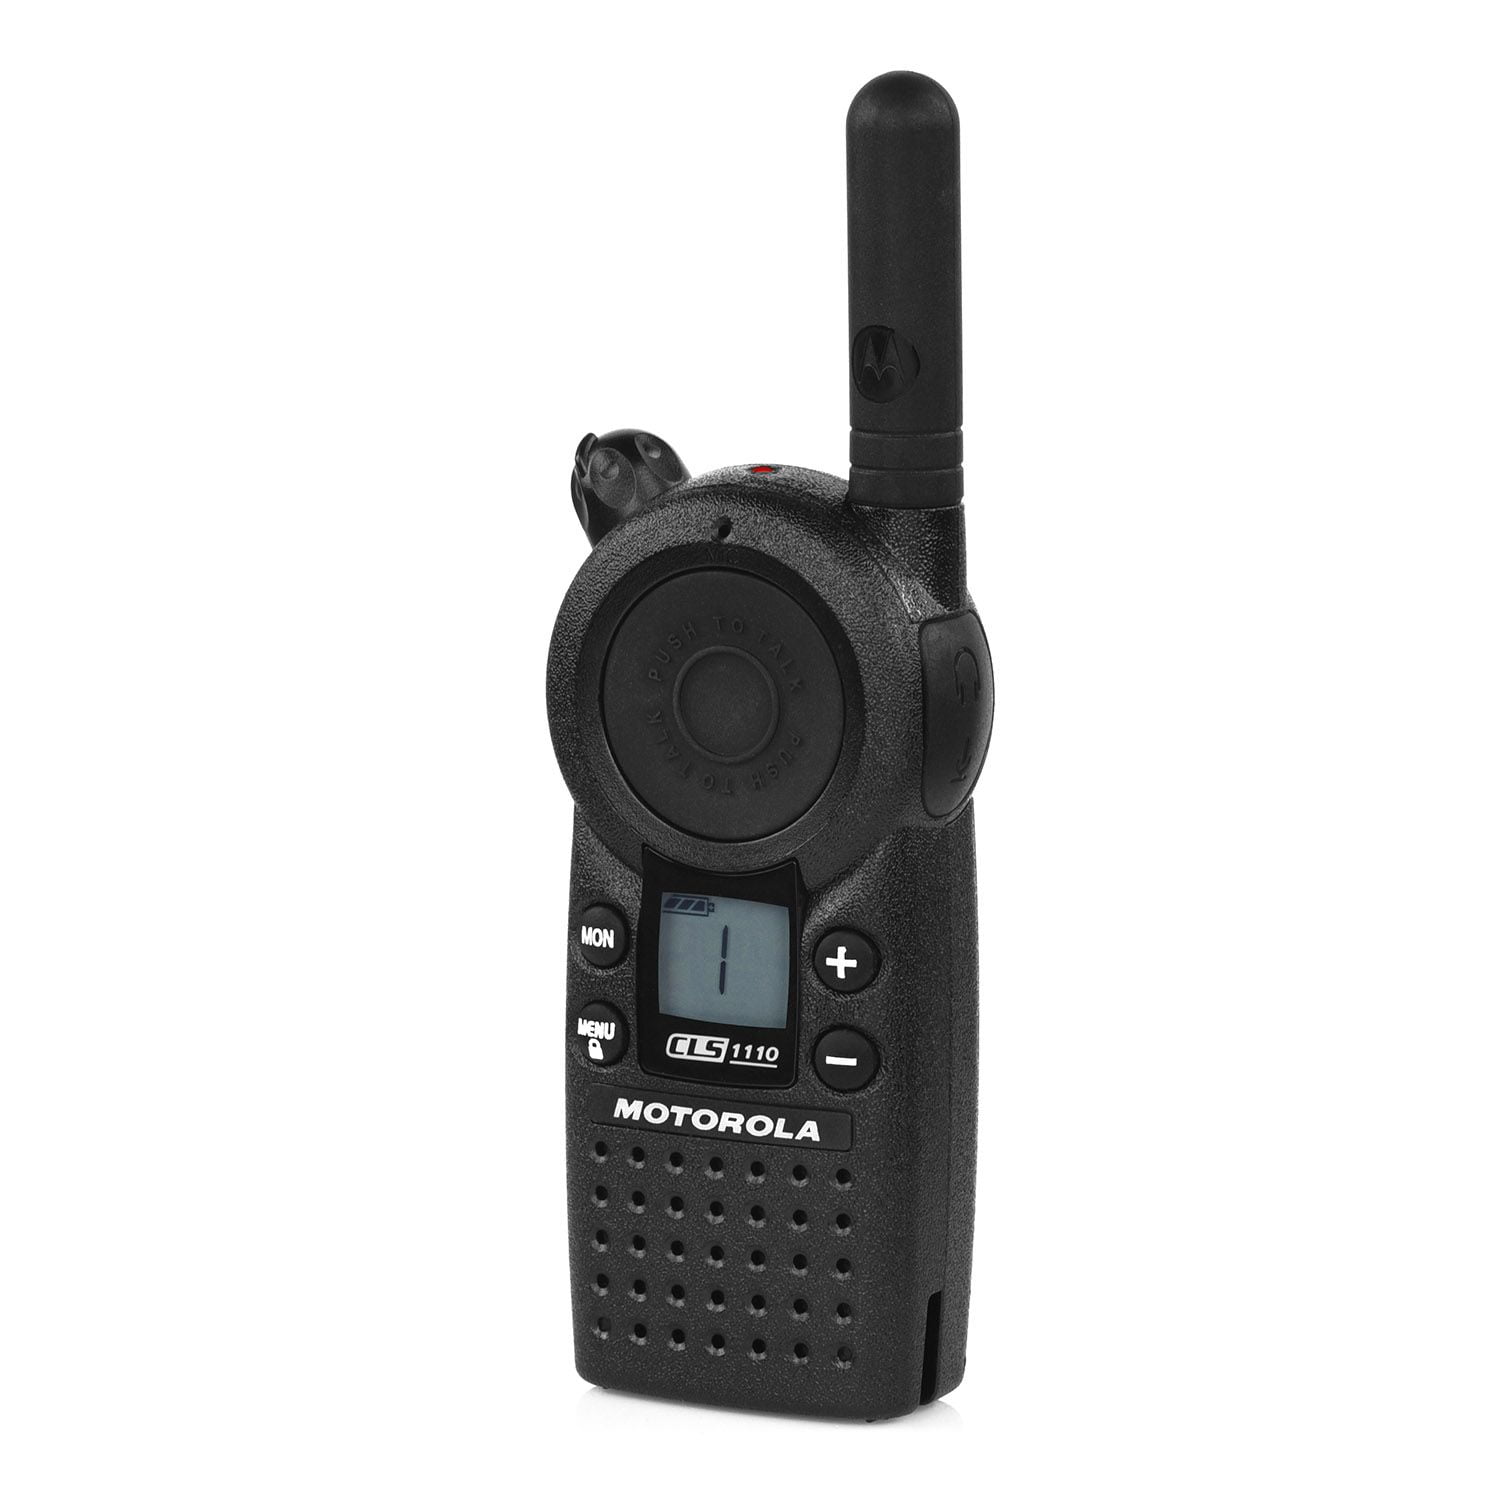 Motorola CLS1110 (4-Radios) Motorola CLS1110 Two-way Radio for Business 